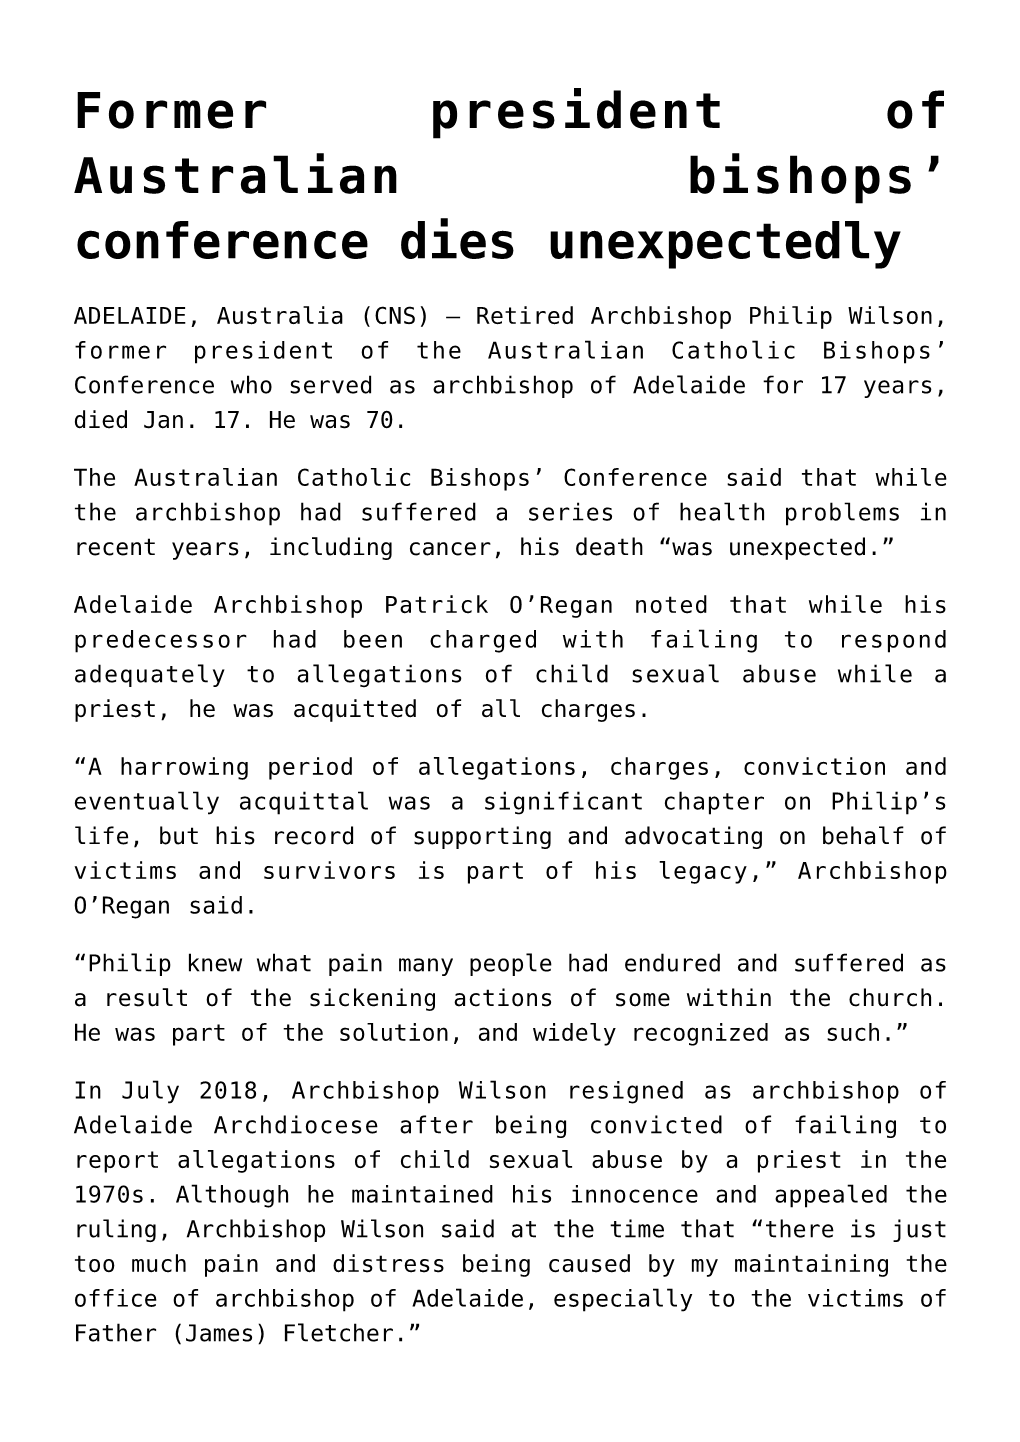 Former President of Australian Bishops&#8217; Conference Dies